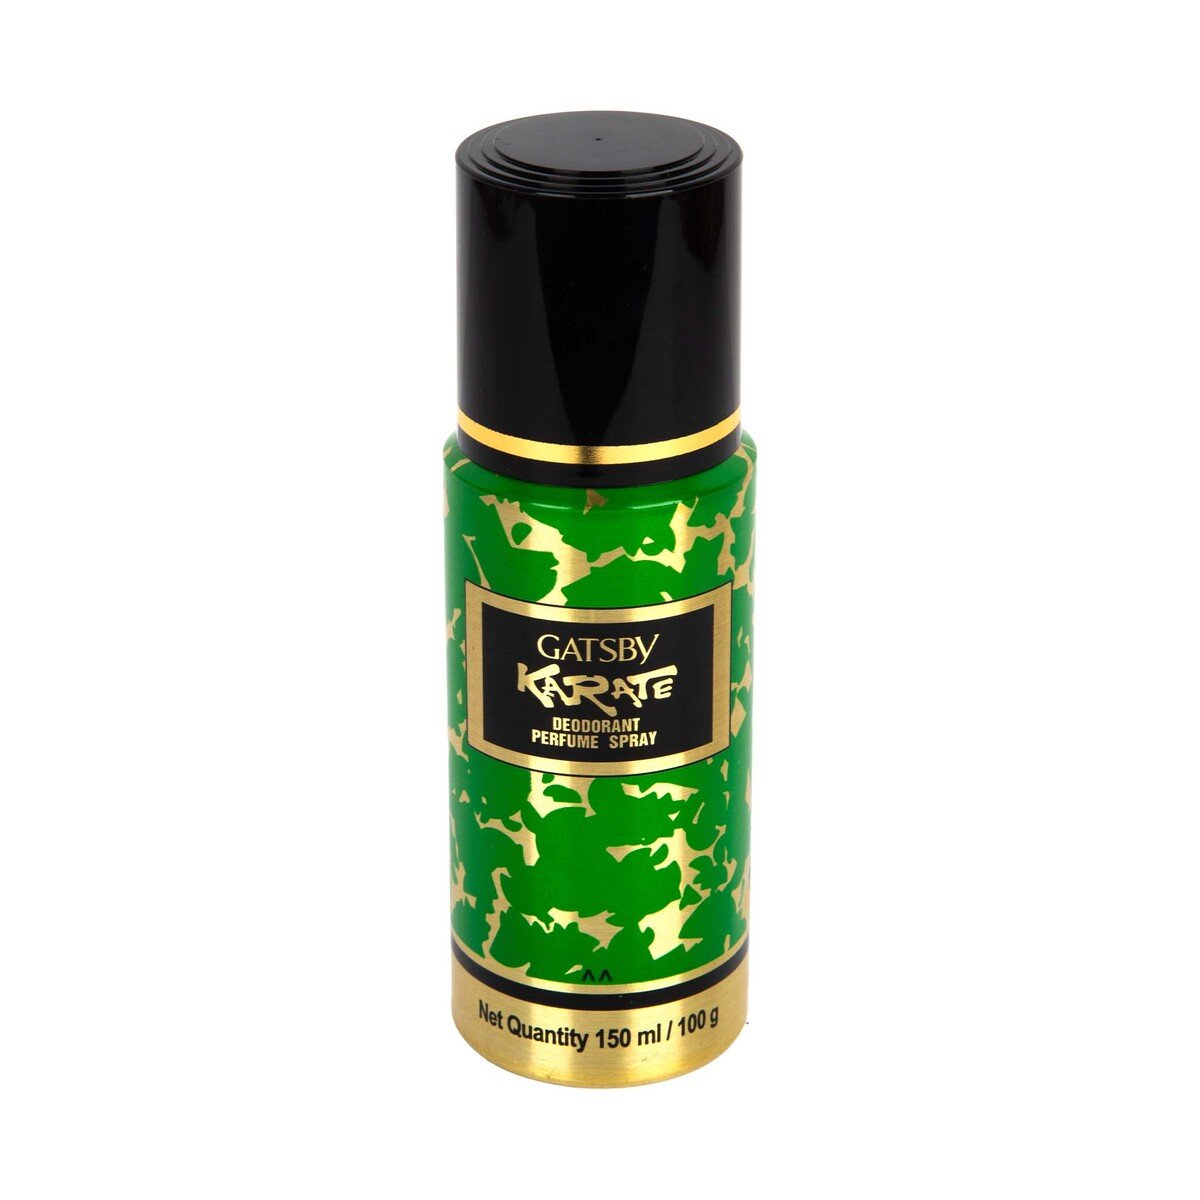 Gatsby Karate Deodorant Perfume Spray for Men 150 ml